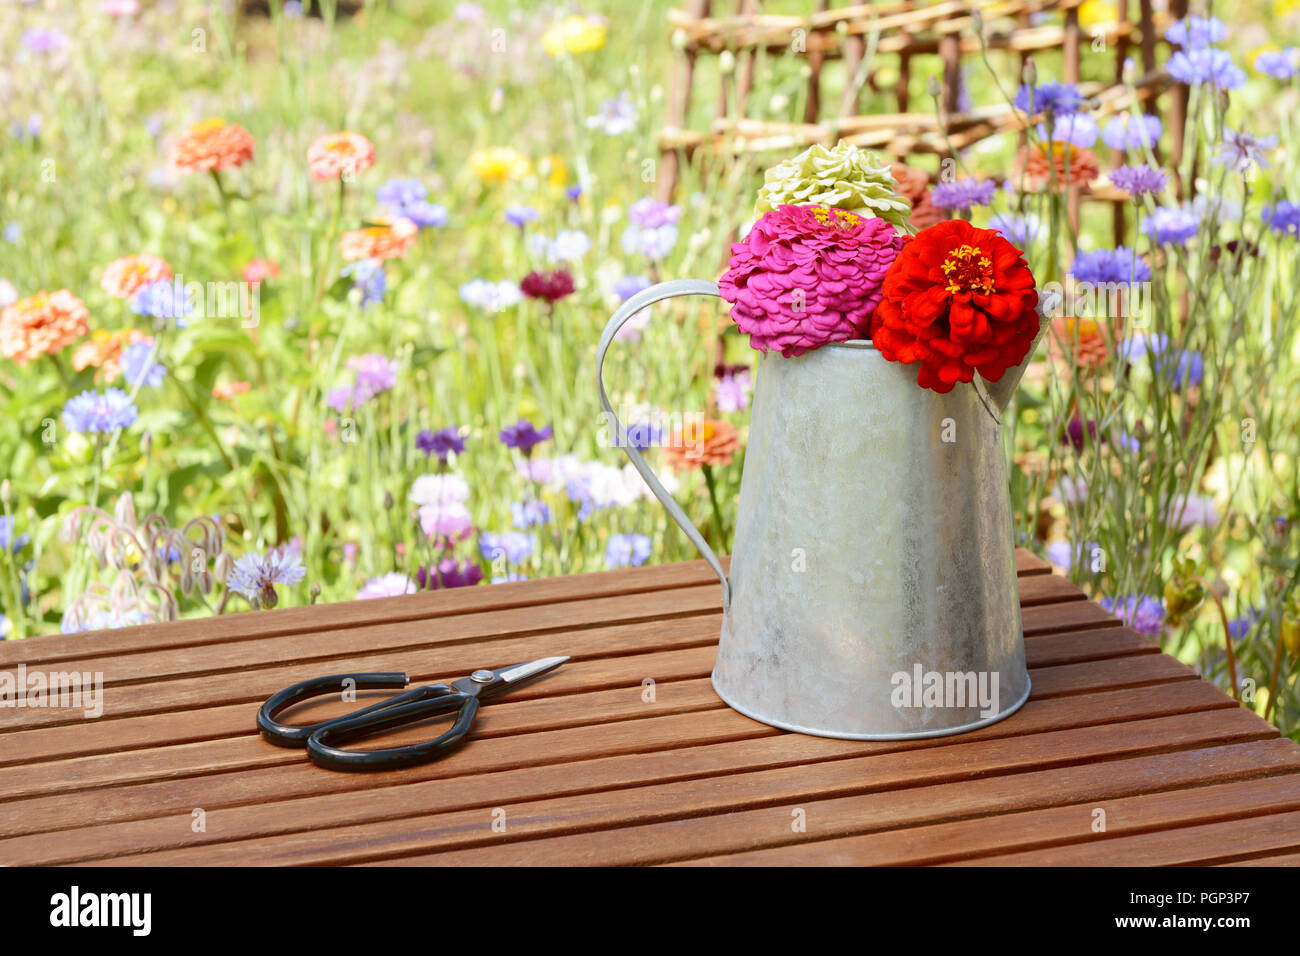 Florist scissors lie next to a rustic metal jug holding freshly cut zinnia blooms in a summer flower garden Stock Photo